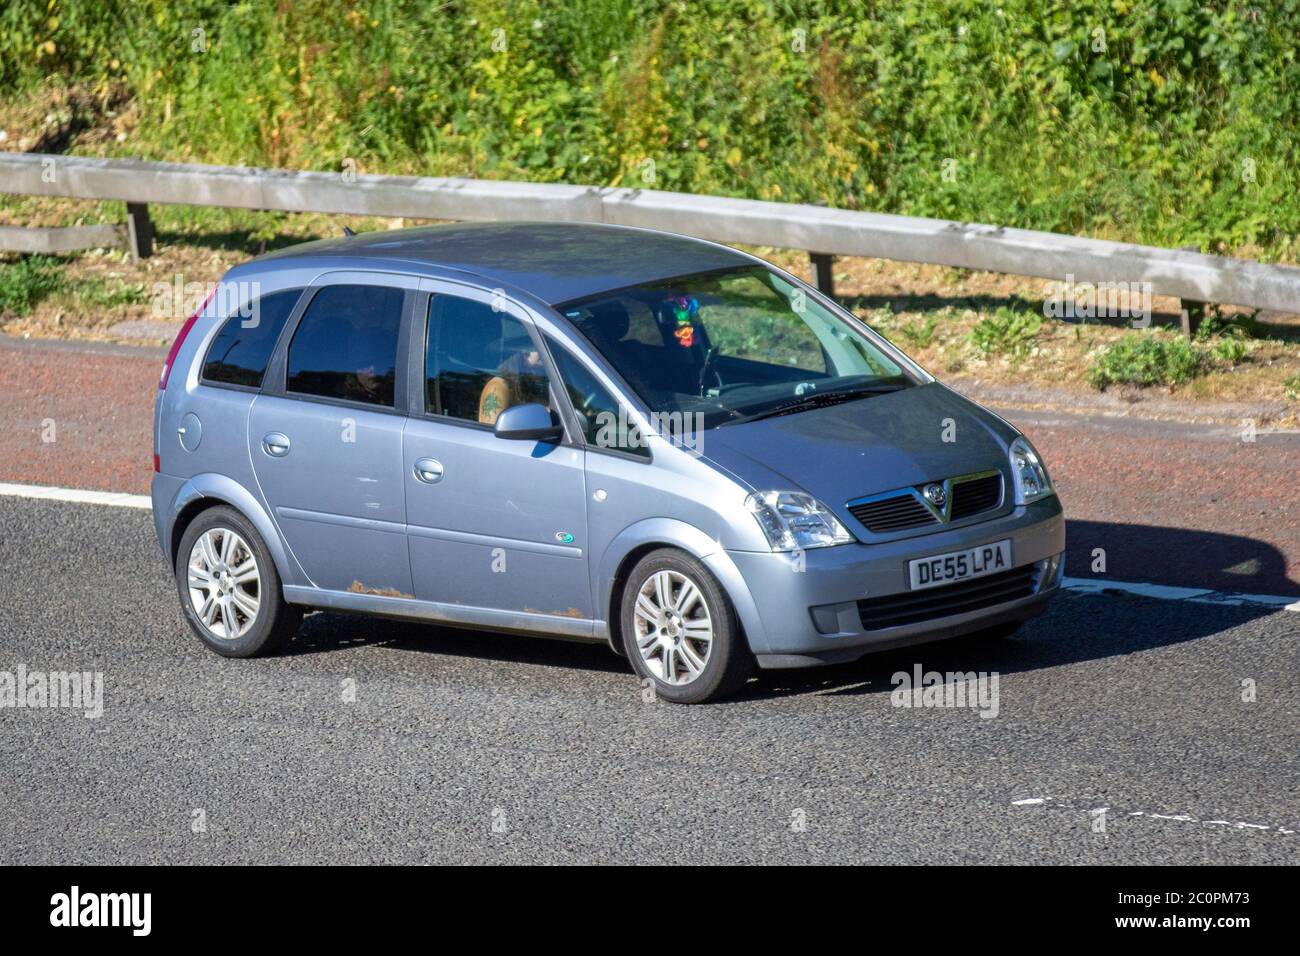 Vauxhall meriva cars fotografías e imágenes de alta resolución - Alamy